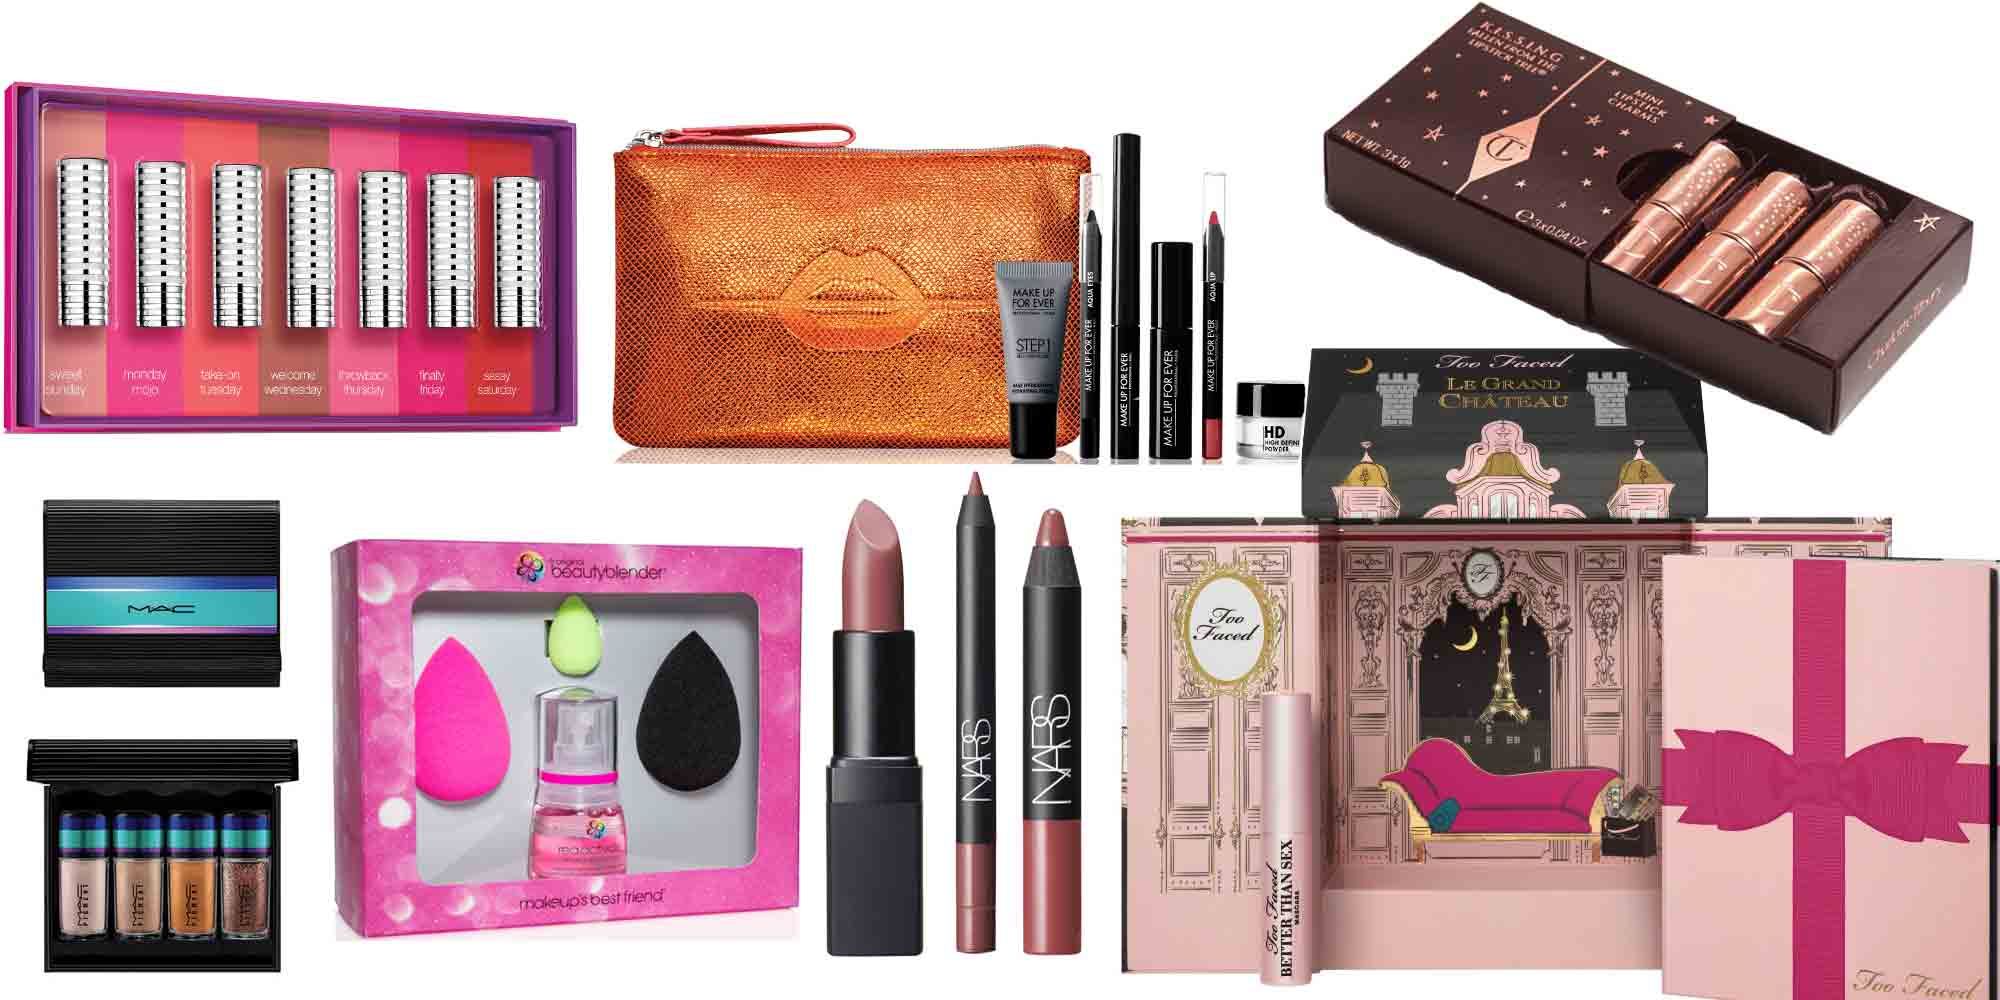 Pamflet morfine blouse The ultimate makeup gift sets for Christmas 2015